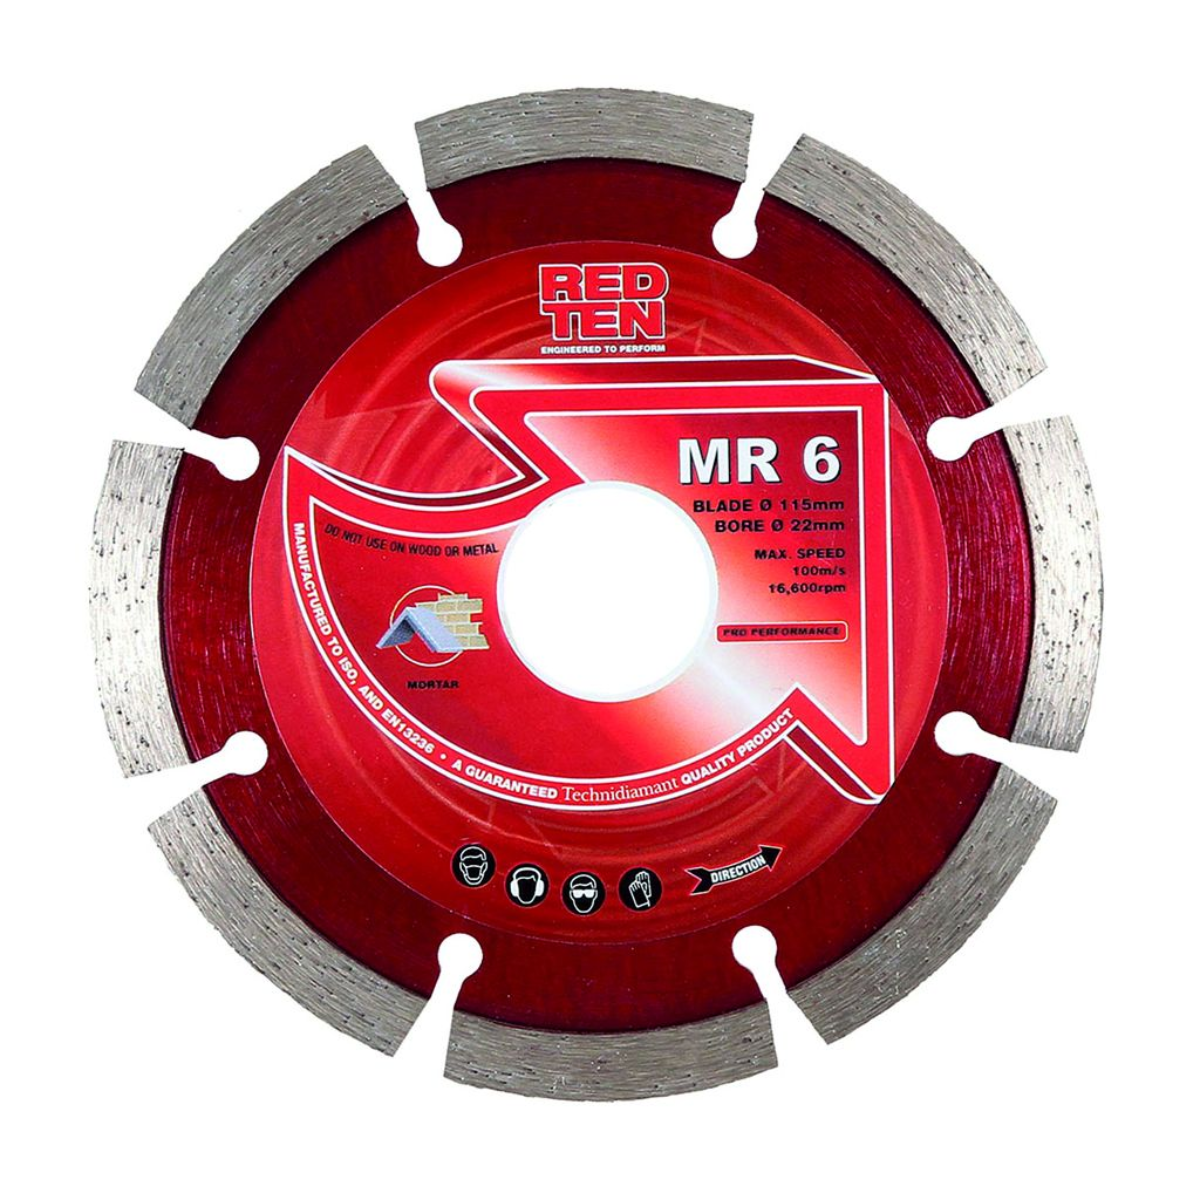 Red Ten MR-6 Mortar Rake